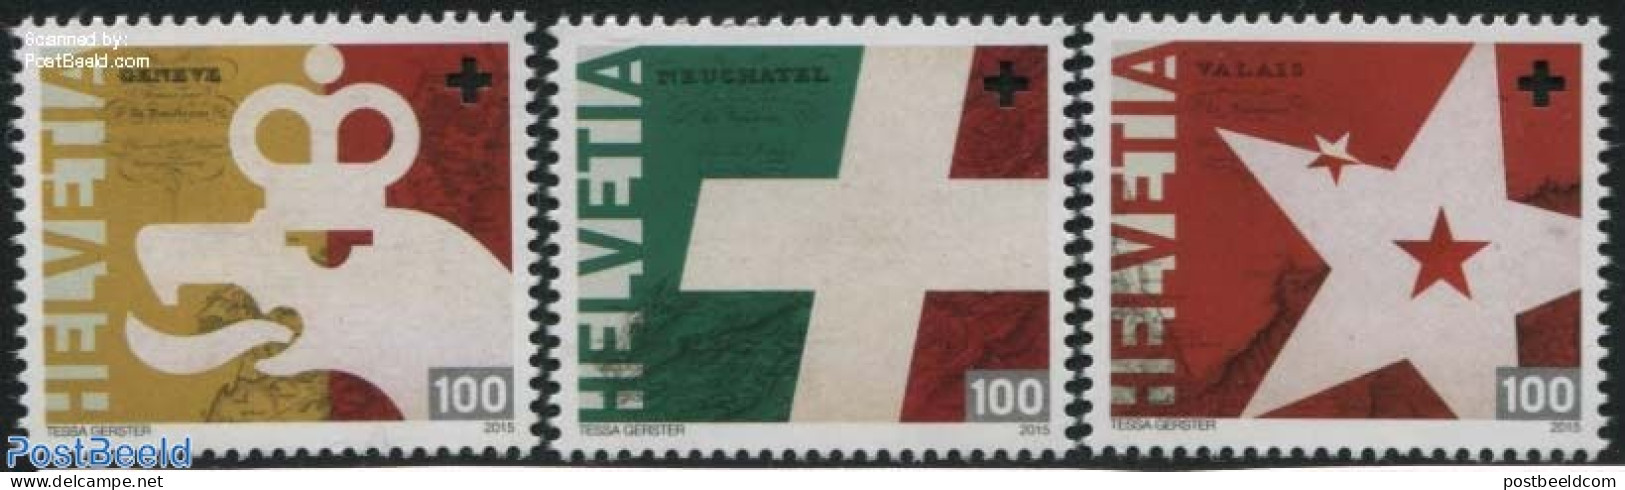 Switzerland 2015 Accession Of Geneve, Neuchatel & Valais 3v, Mint NH, History - Various - Coat Of Arms - History - Maps - Ongebruikt